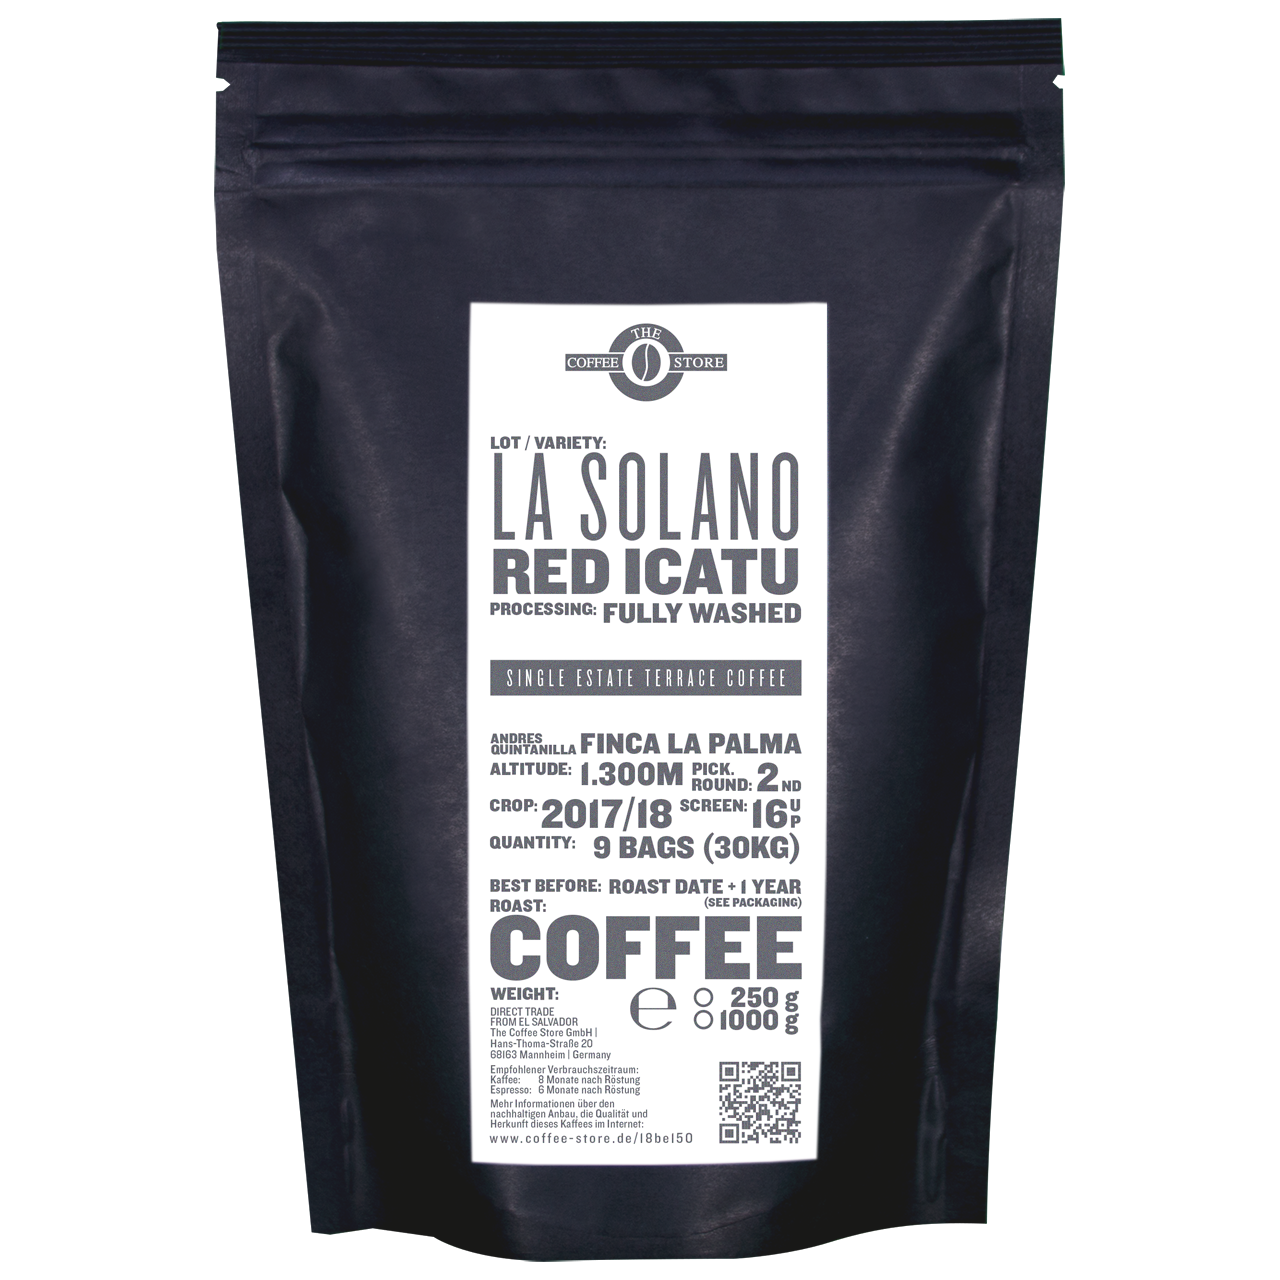 La Solano, Red Icatu - Kaffeeröstung